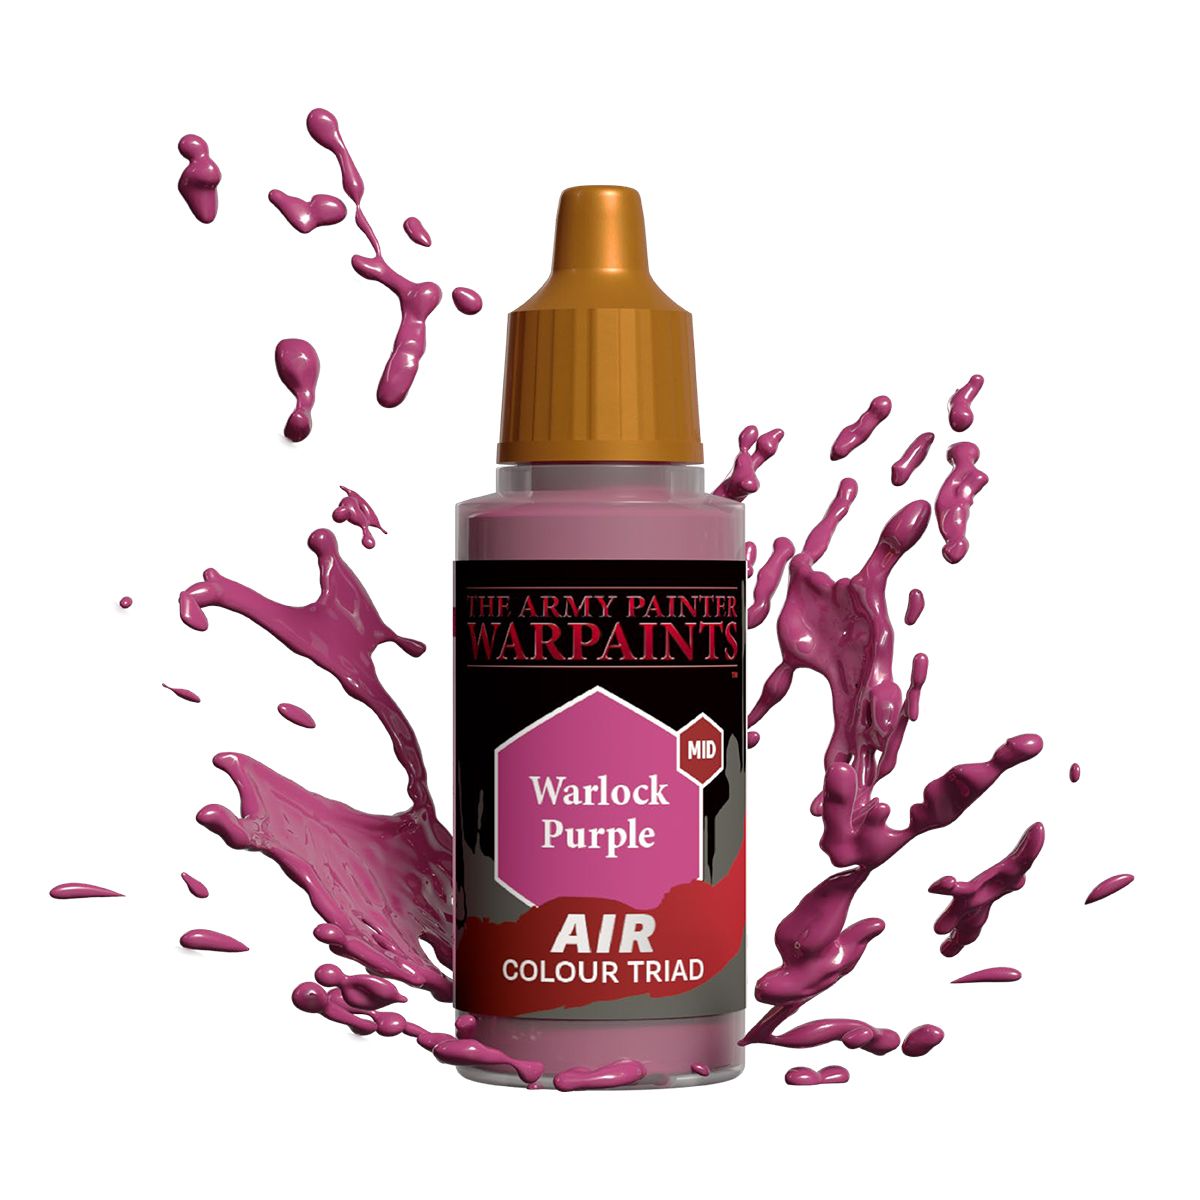 Army Painter Warpaints - Air Warlock Purple Acrylic Paint 18ml